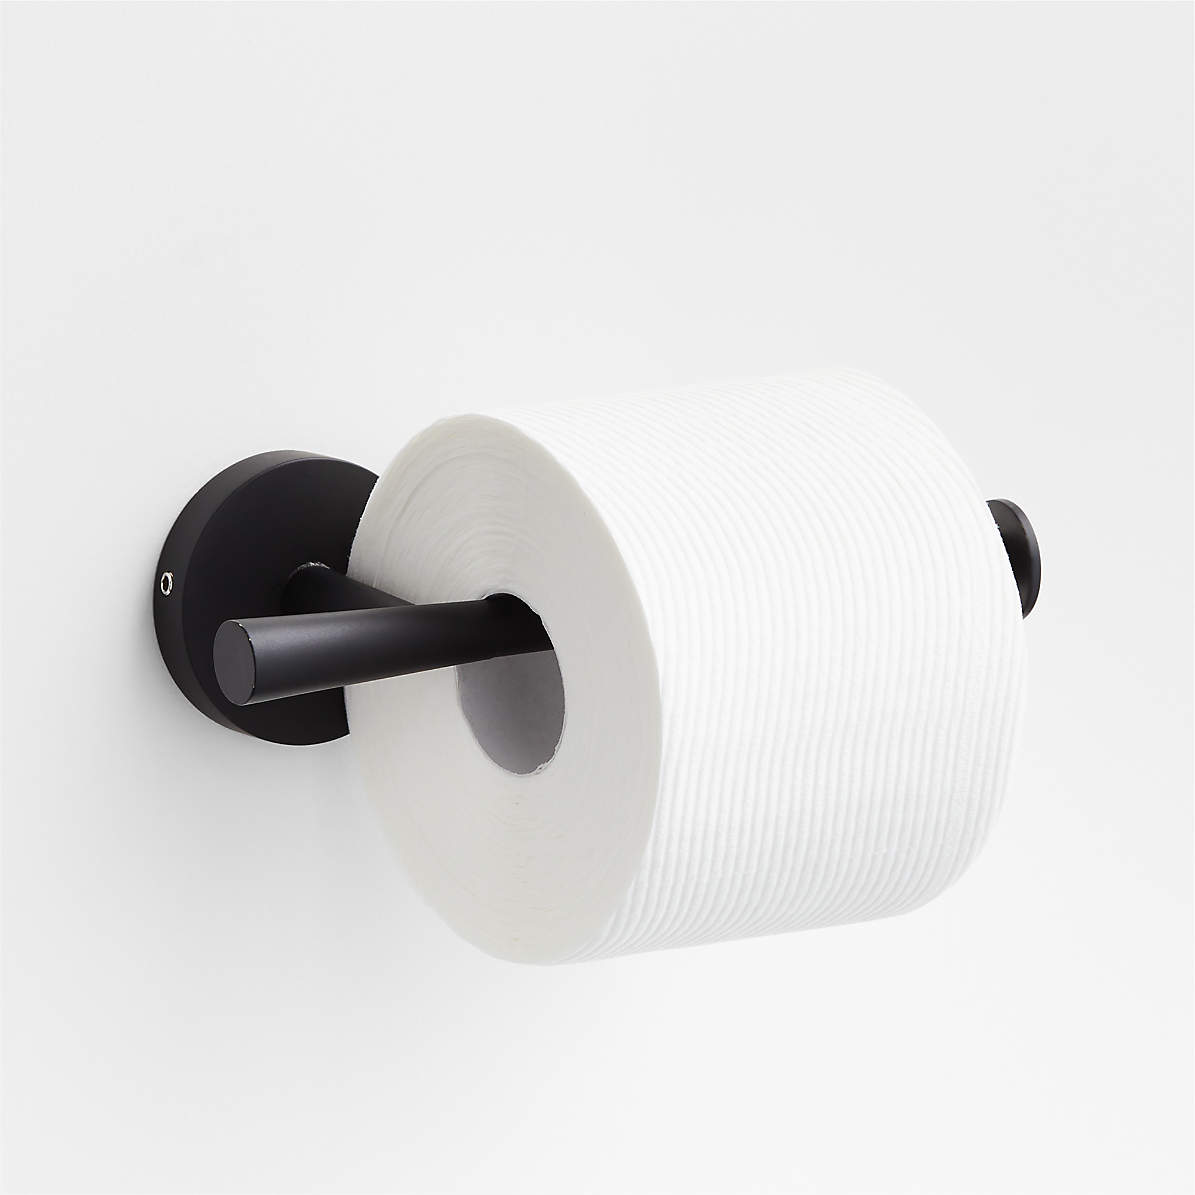 Design House Millbridge Wall Mounted Toilet Paper Roll Holder in Matte Black 544569